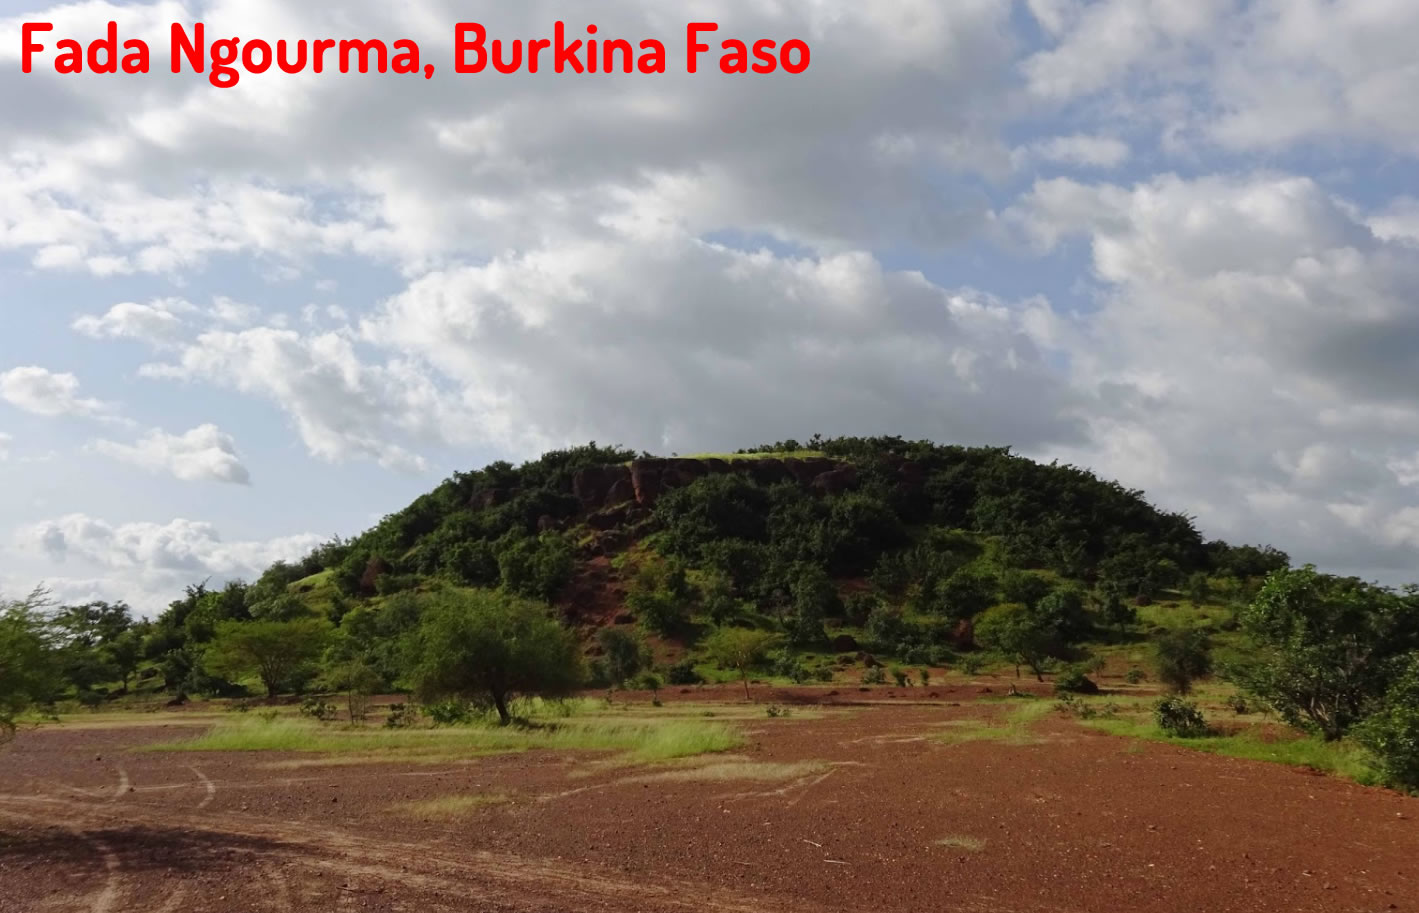 Fada Ngourma Burkina Faso